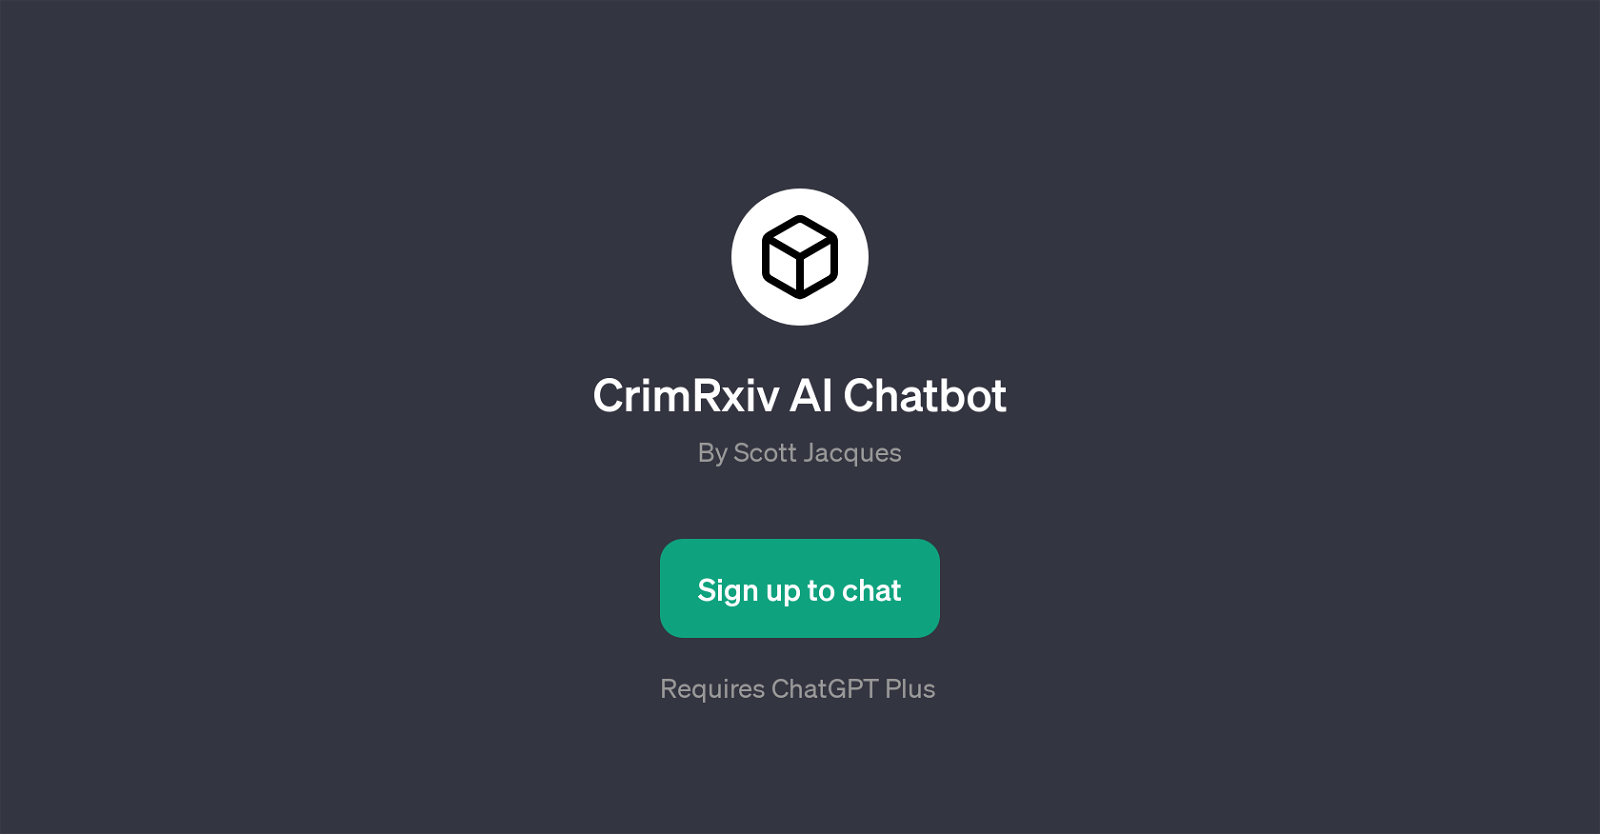 CrimRxiv AI Chatbot website